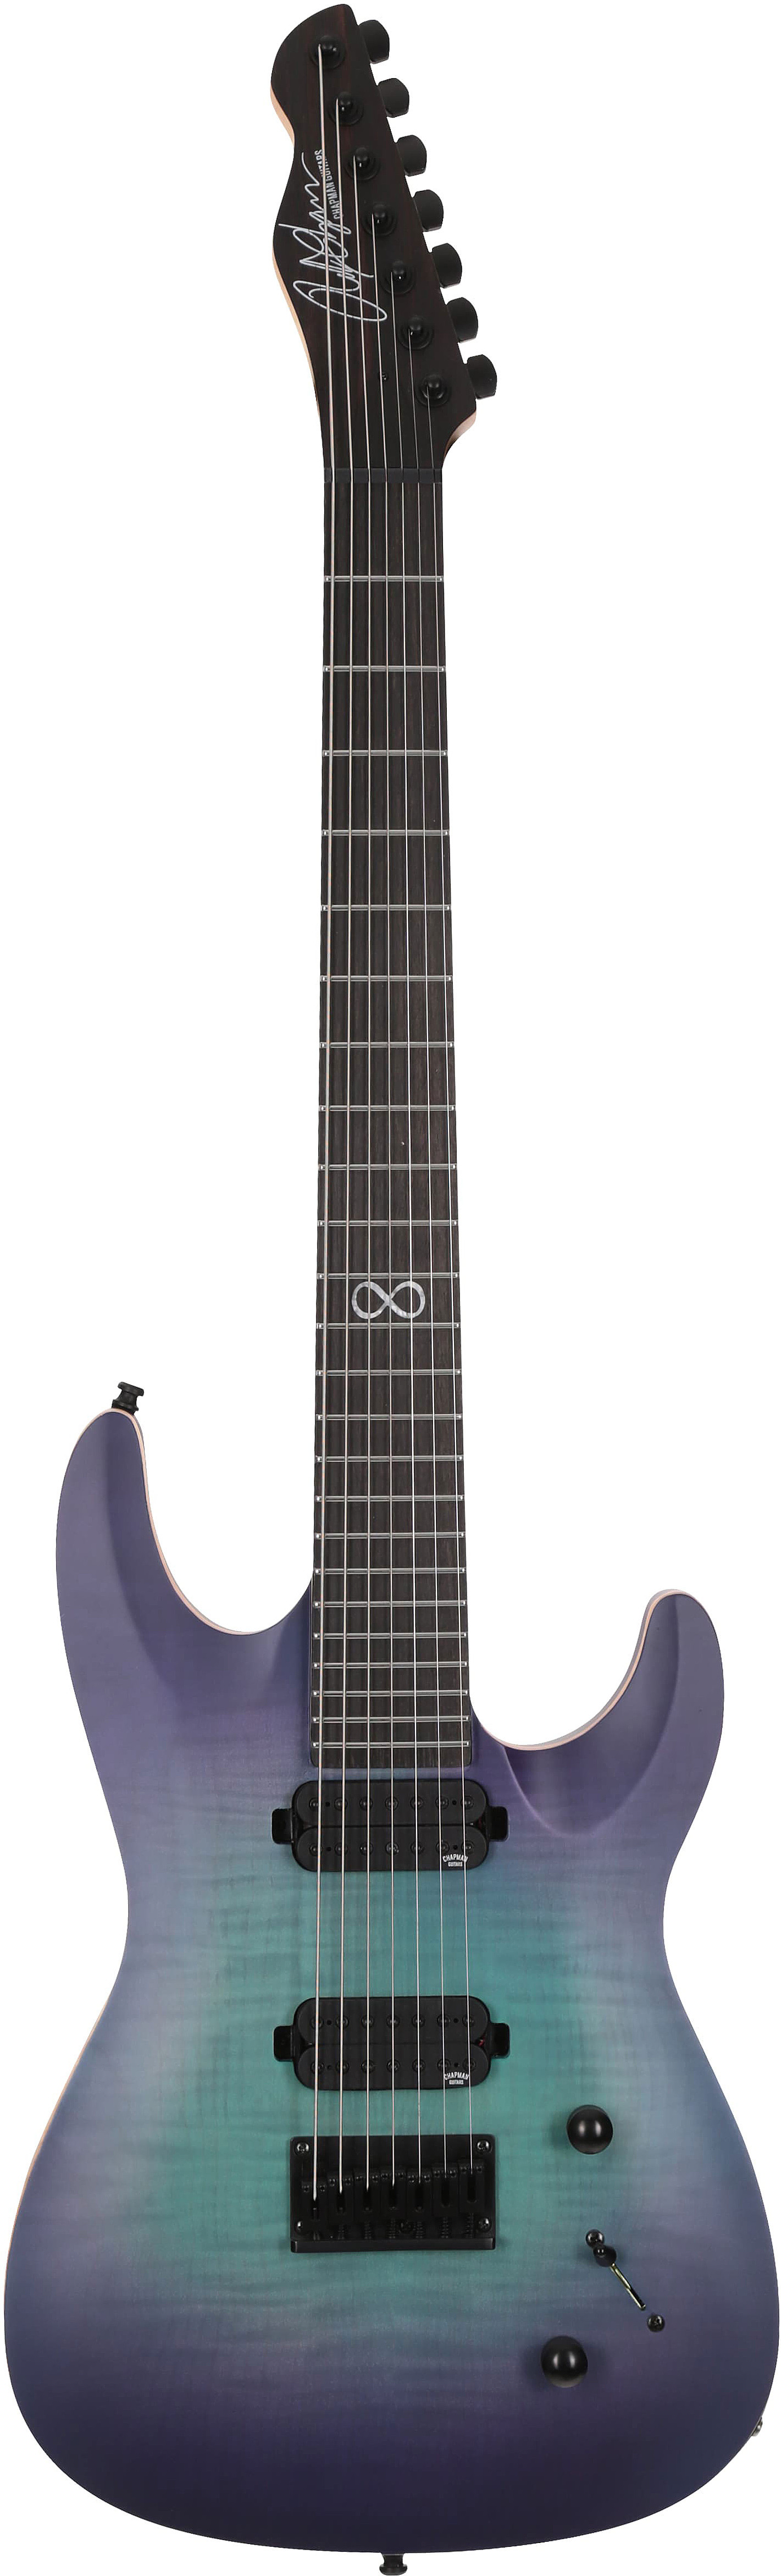 ML1-7 Pro by Chapman Guitars